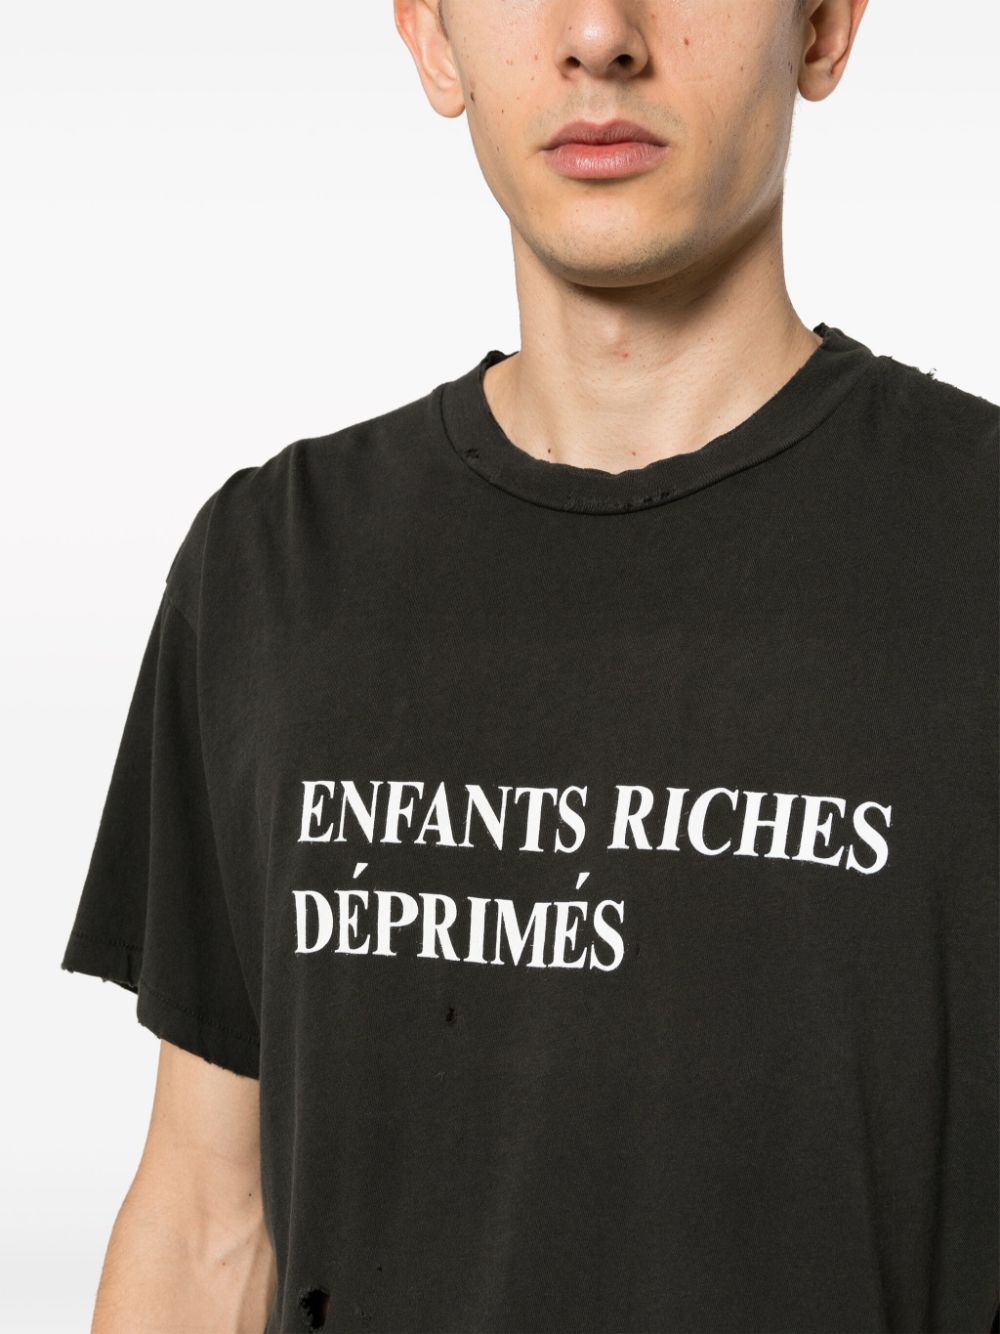 Tシャツ/カットソー(半袖/袖なし)ENFANTS RICHES DÉPRIMÉS クラッシュt